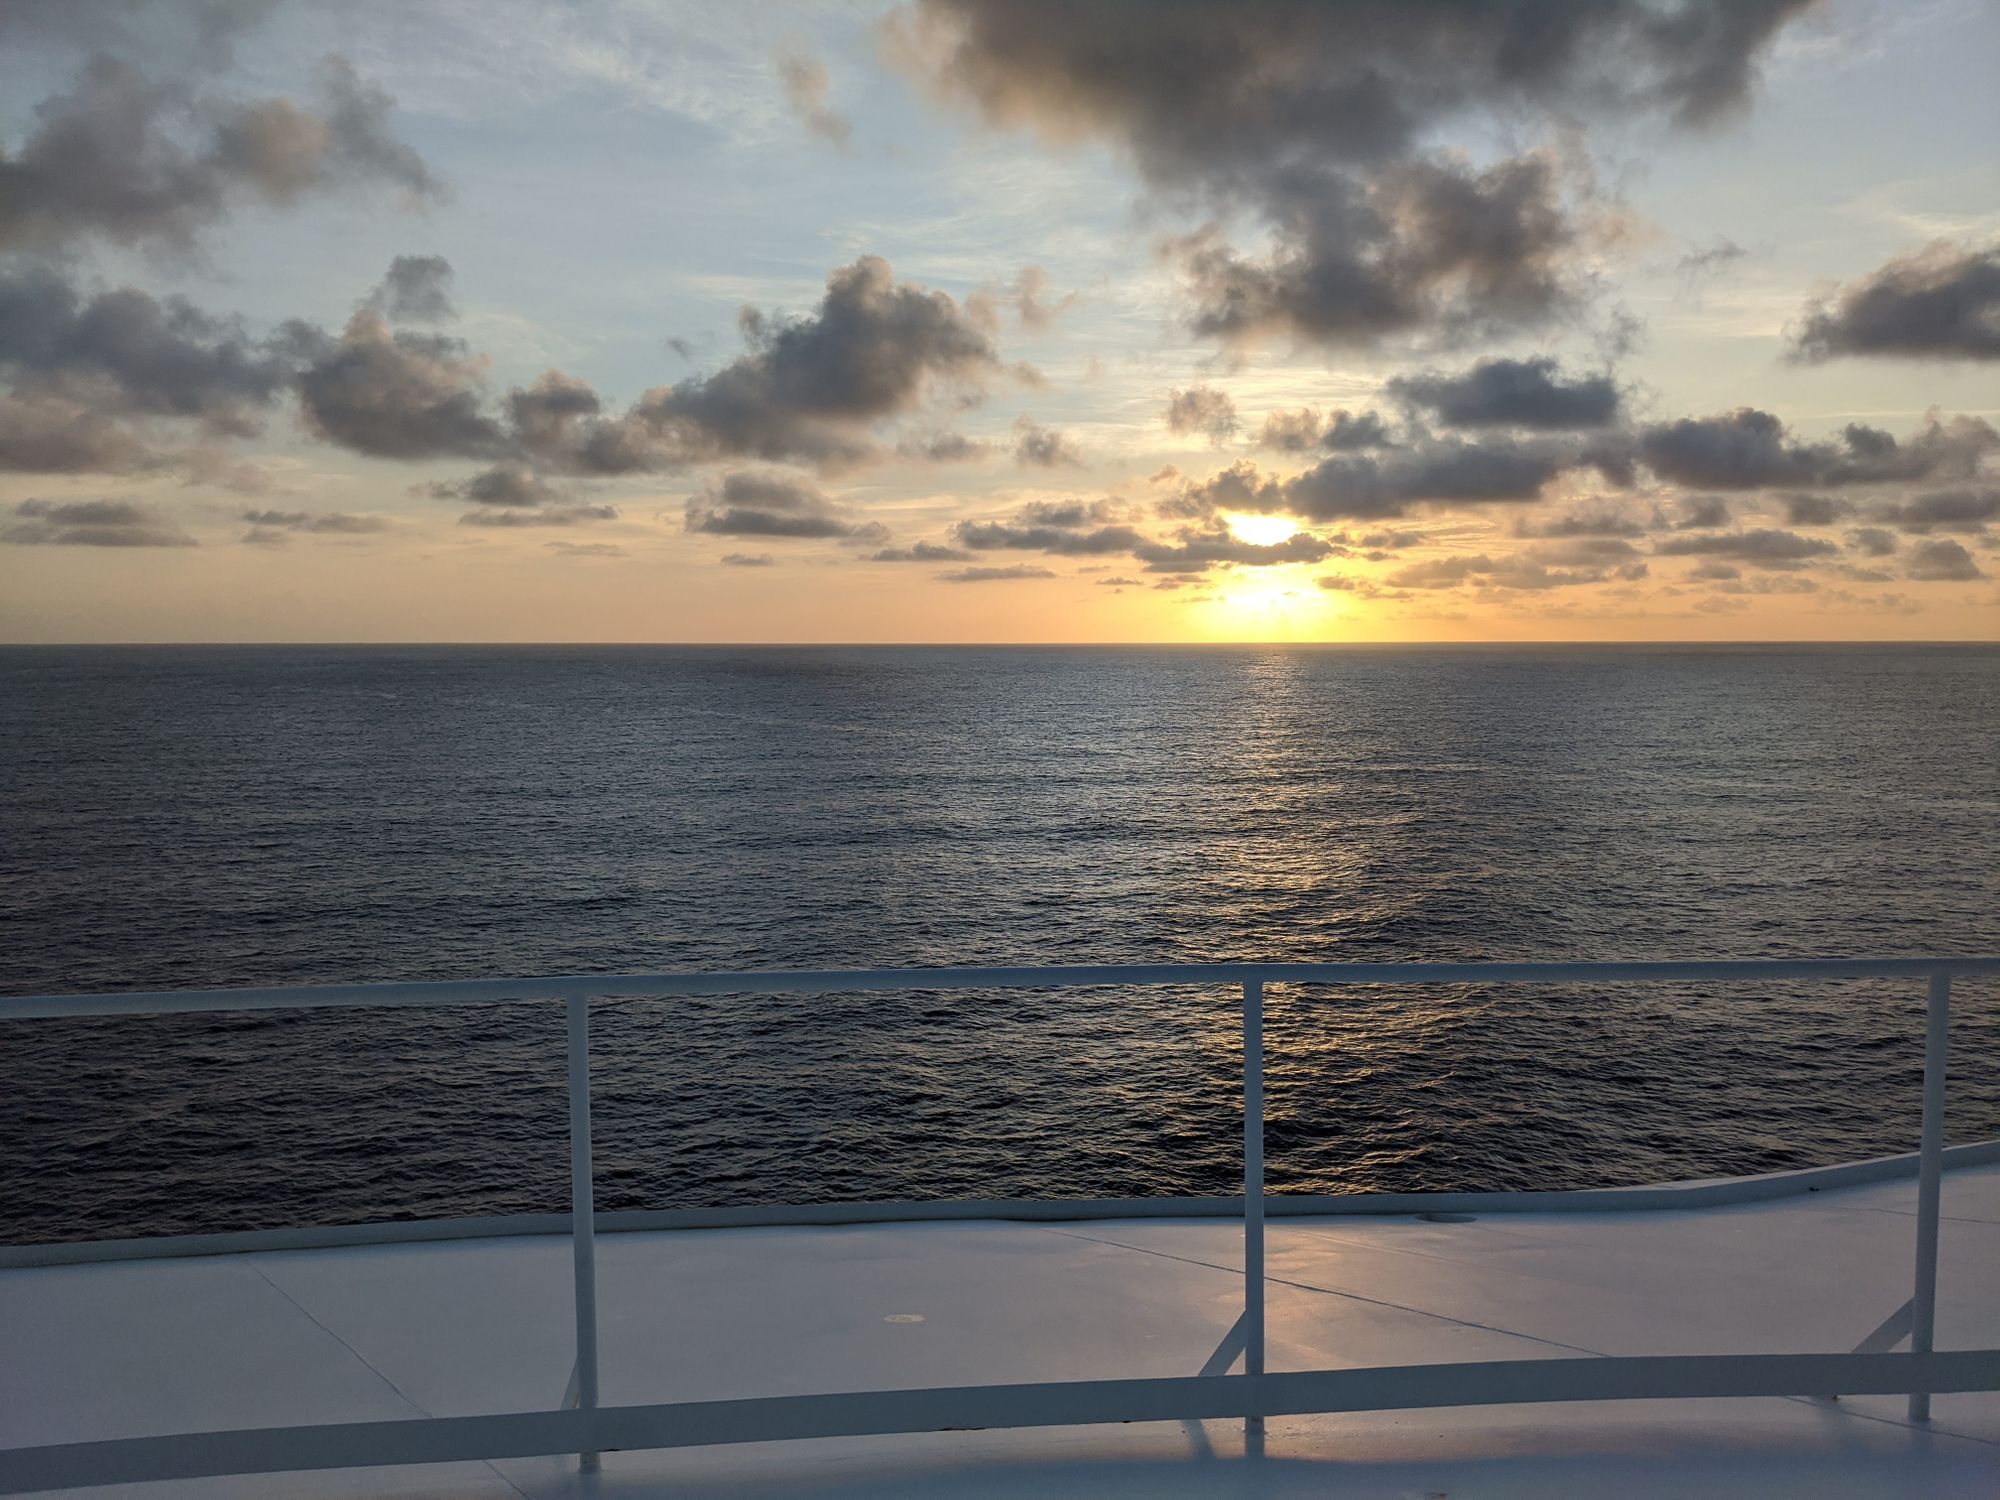 Travel Blog: Adventure of the Seas